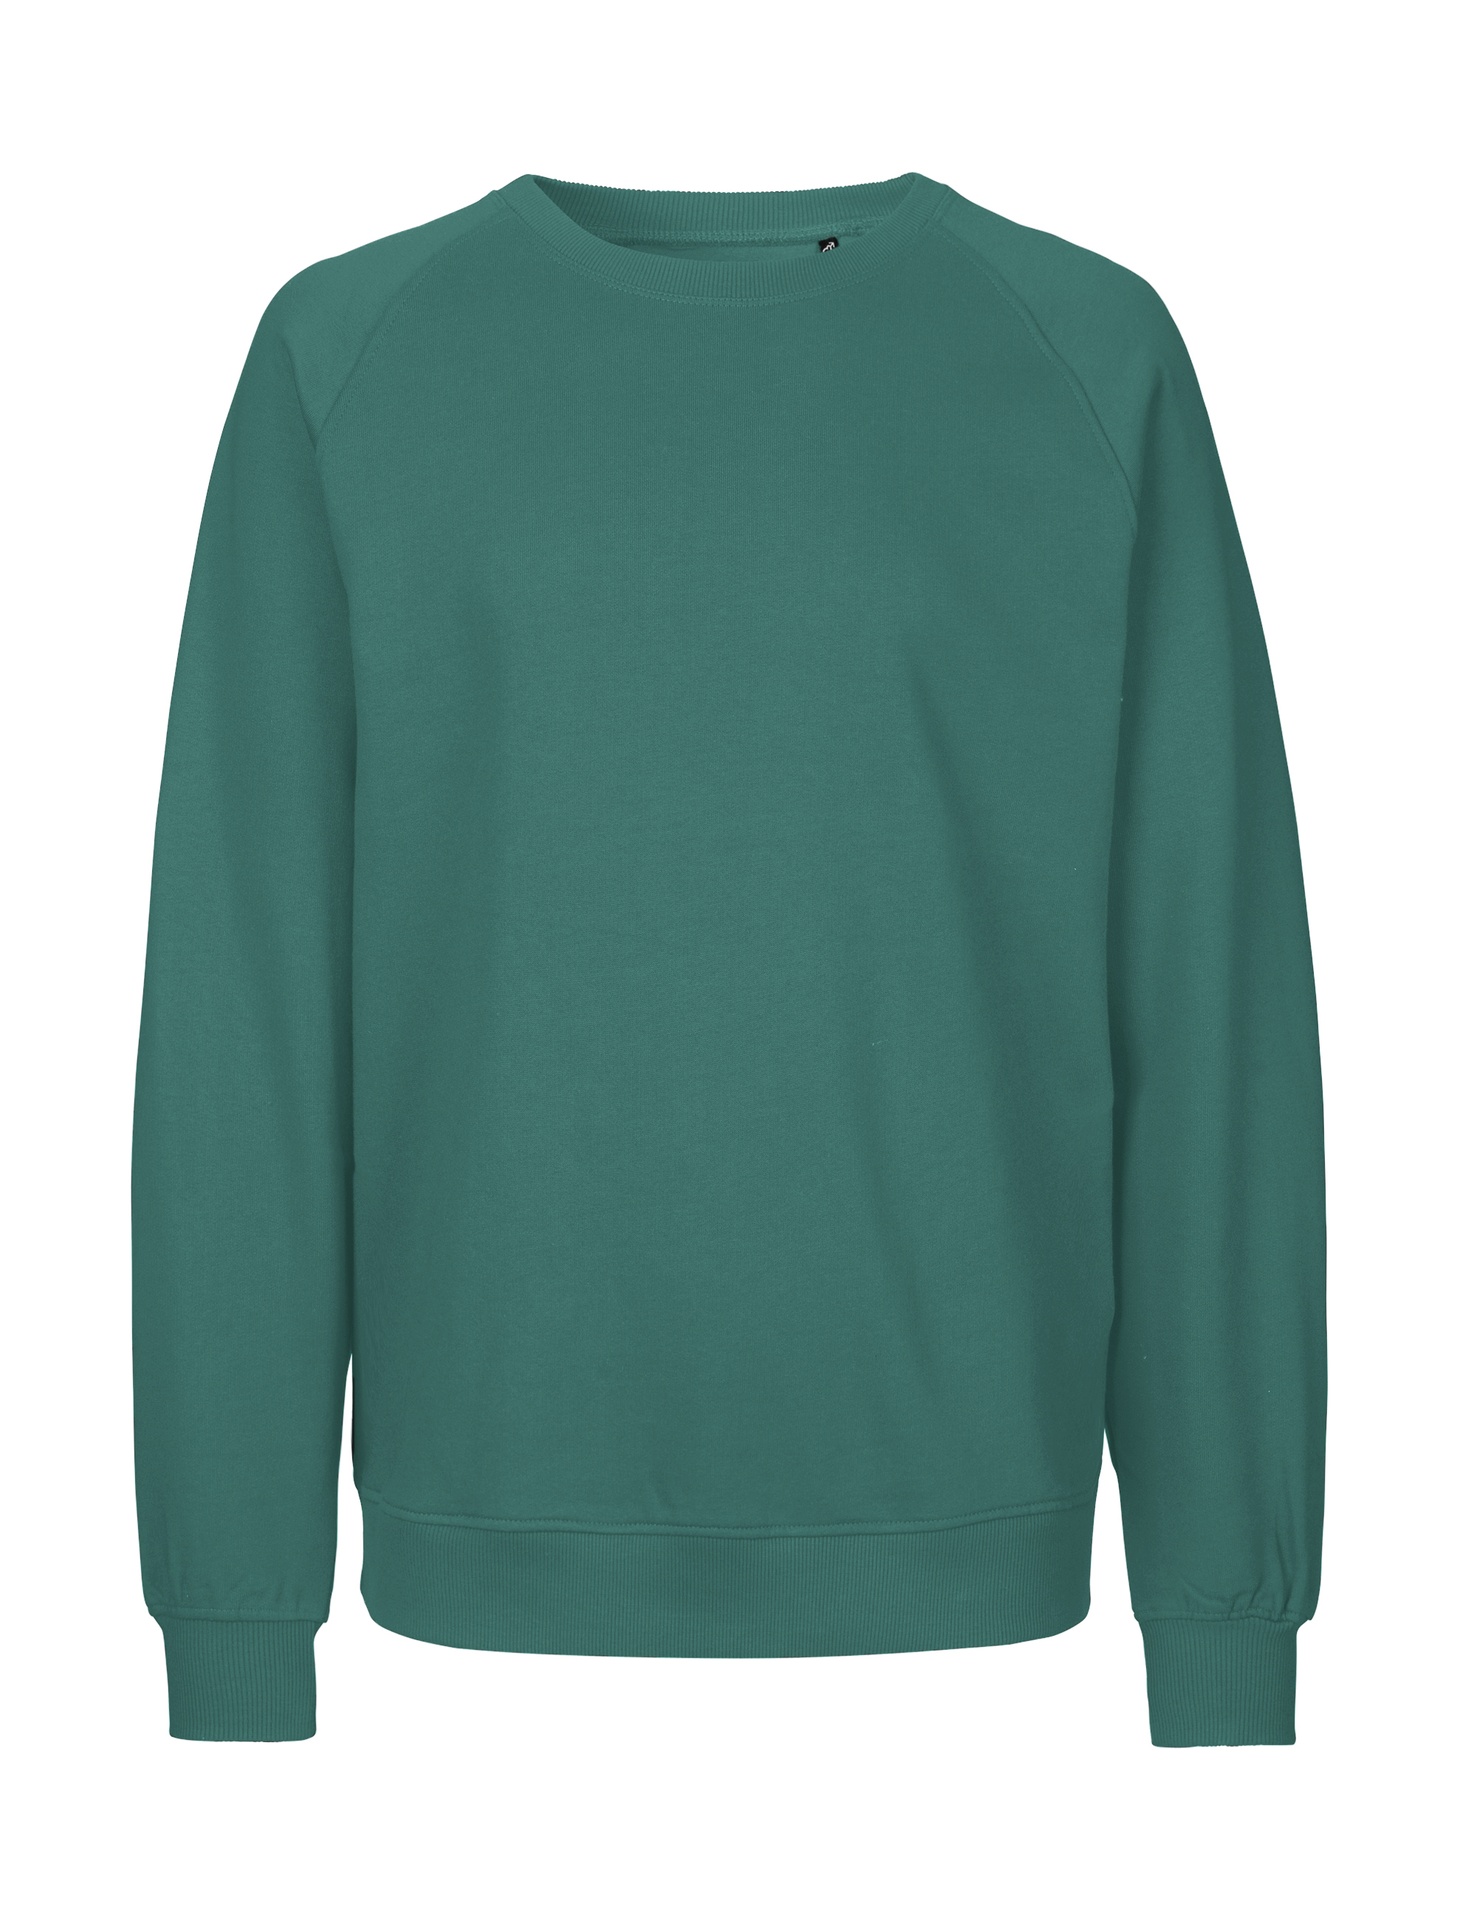 [PR/02871] Unisex Sweatshirt (Teal 52, L)